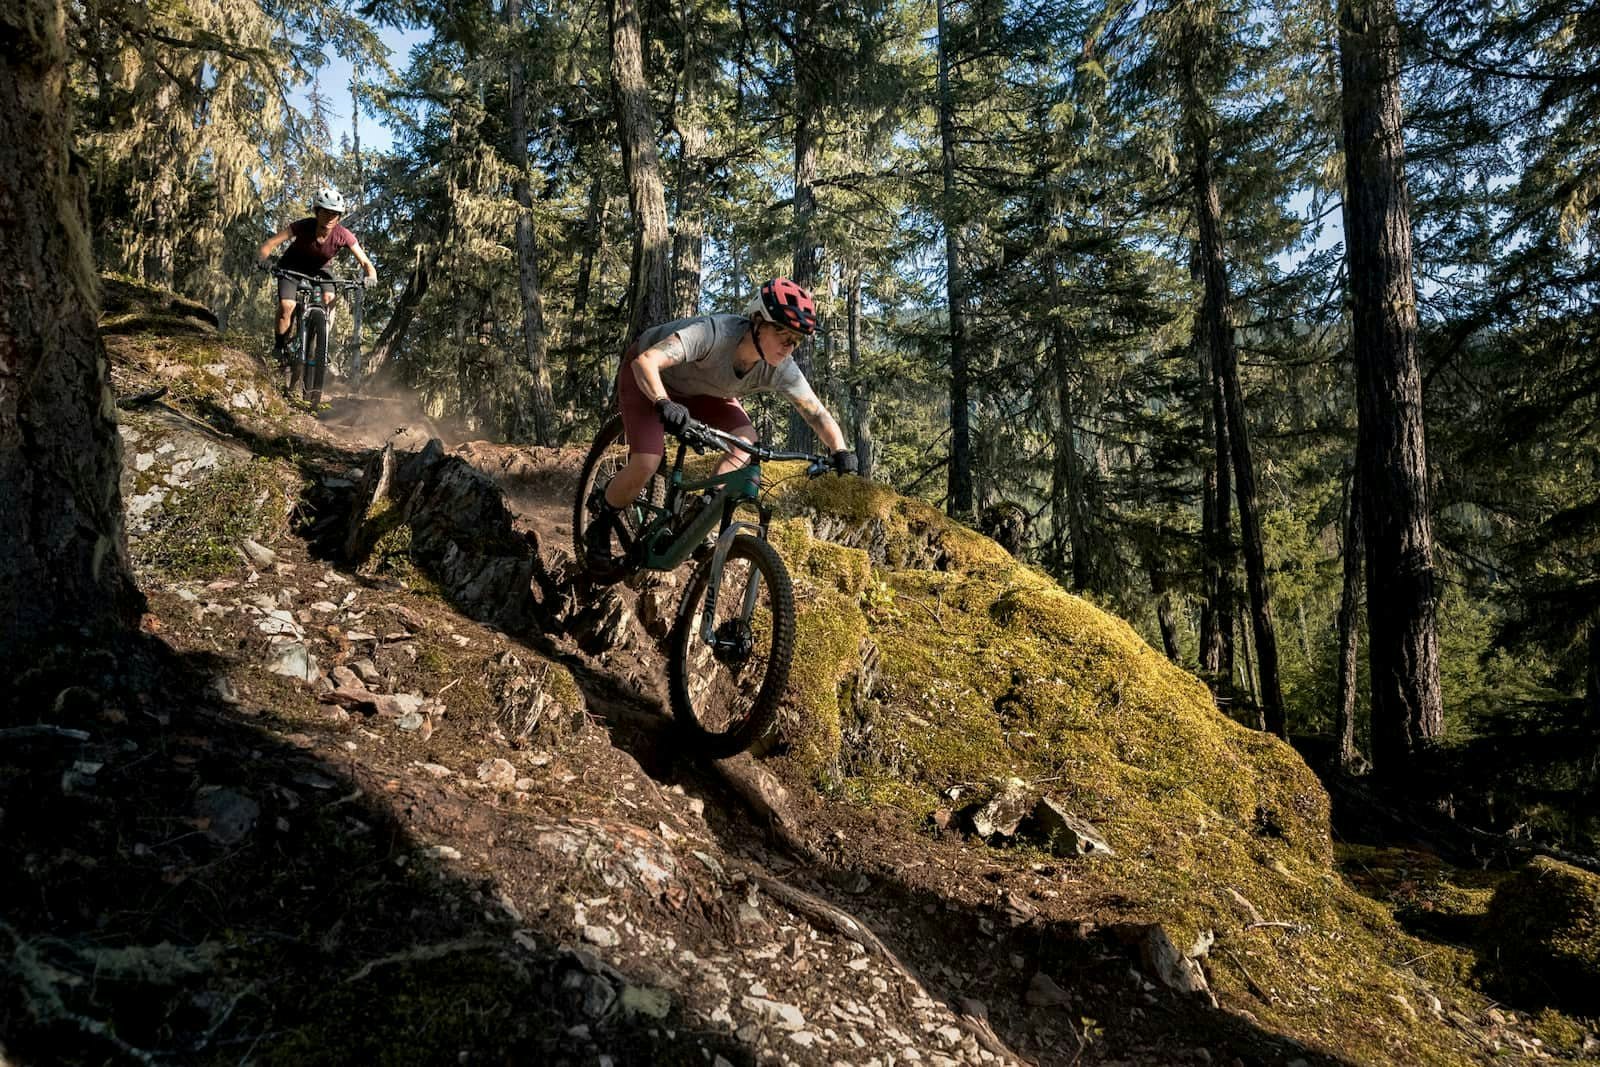 Mountain biker - Sarah Leishman descending through the forest on a dusty singletrack trail